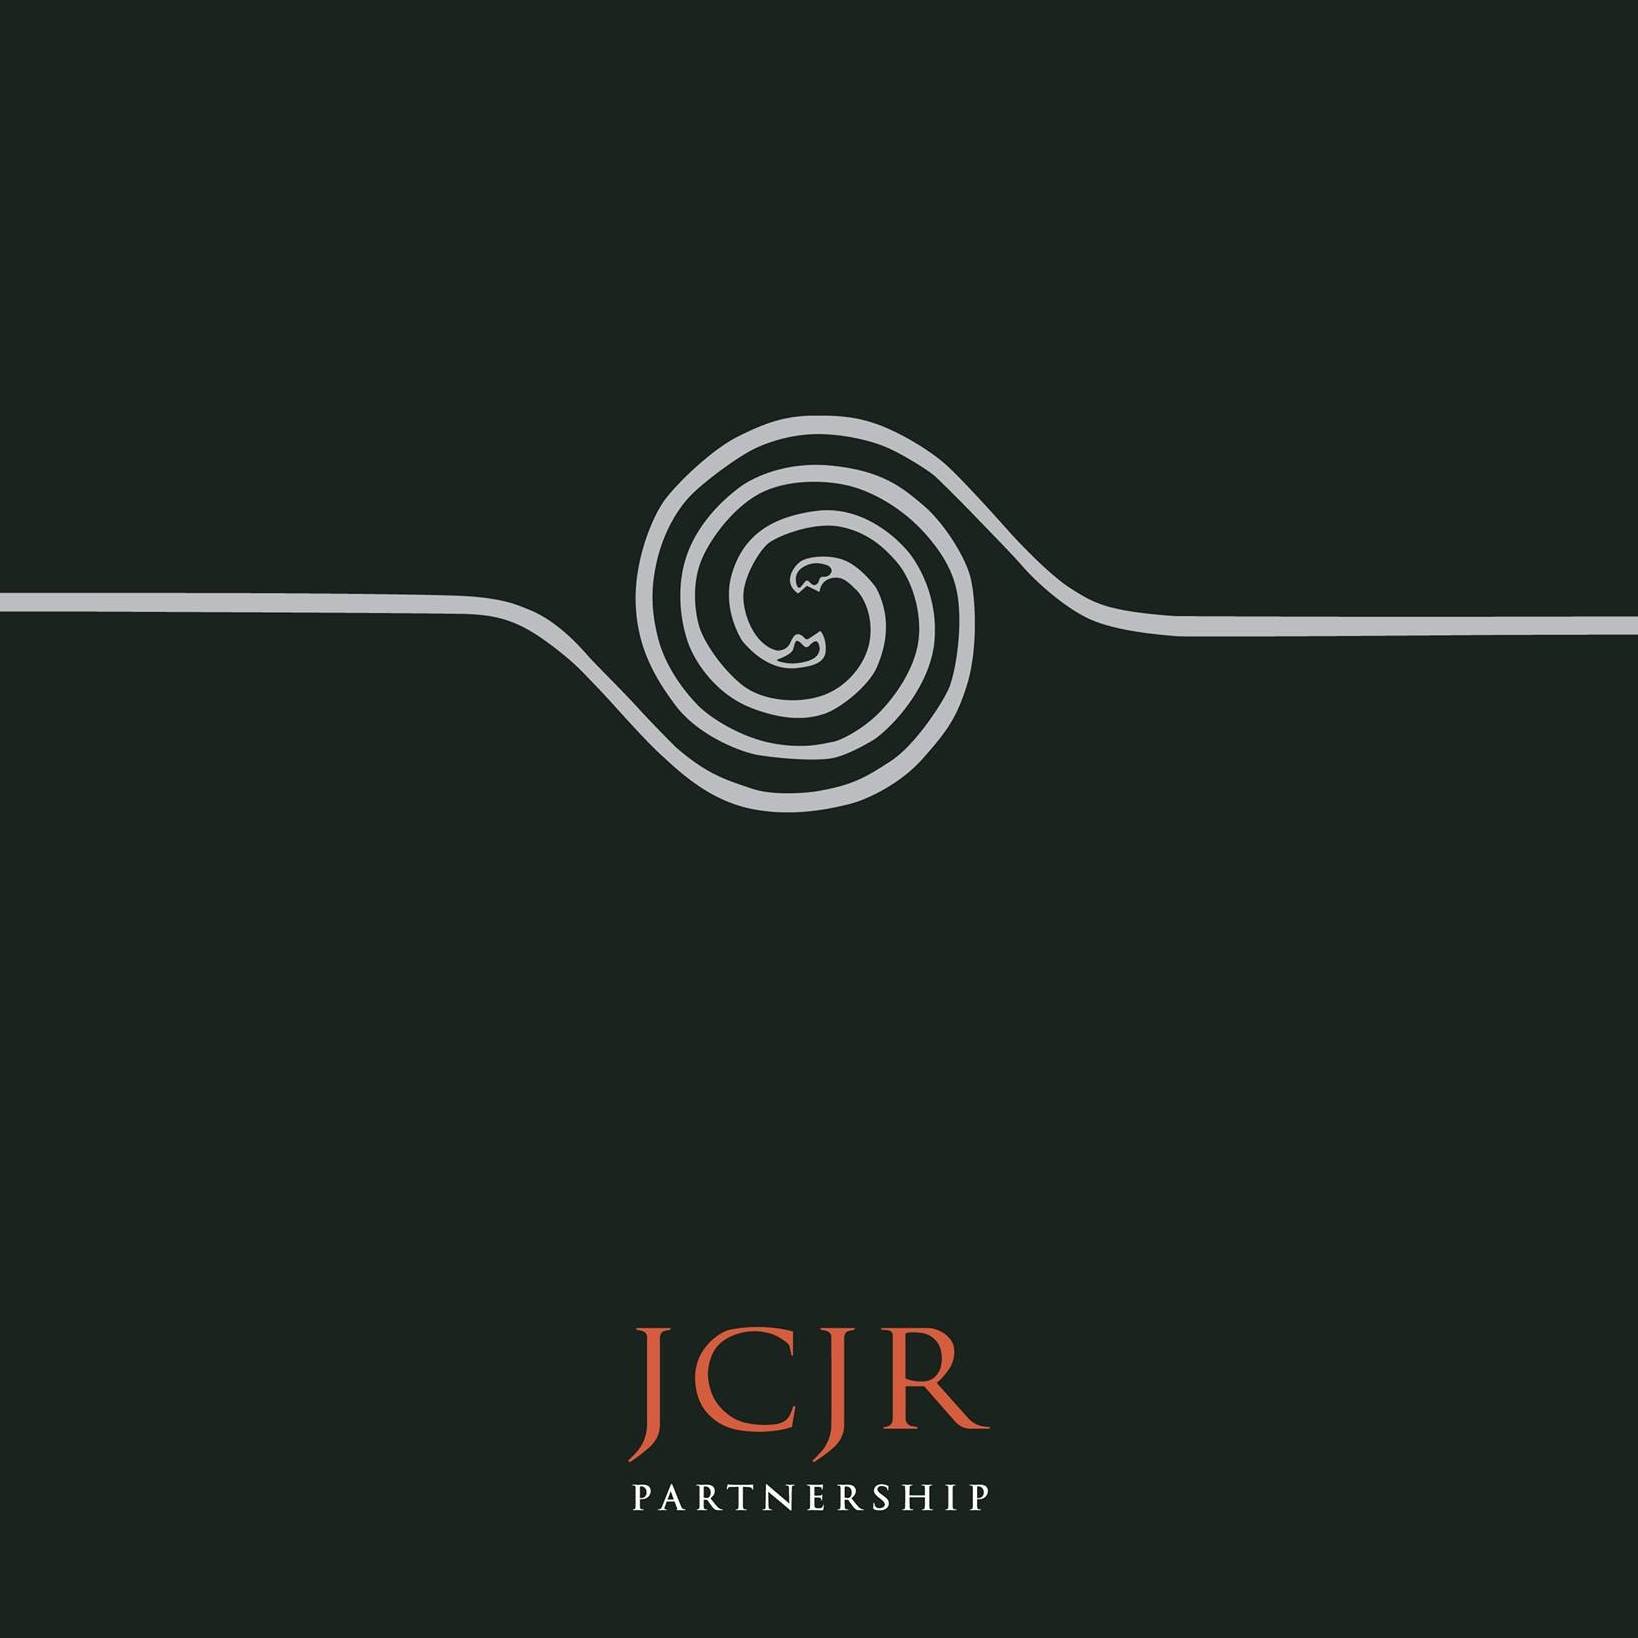 JCJR Partnership|IT Services|Professional Services